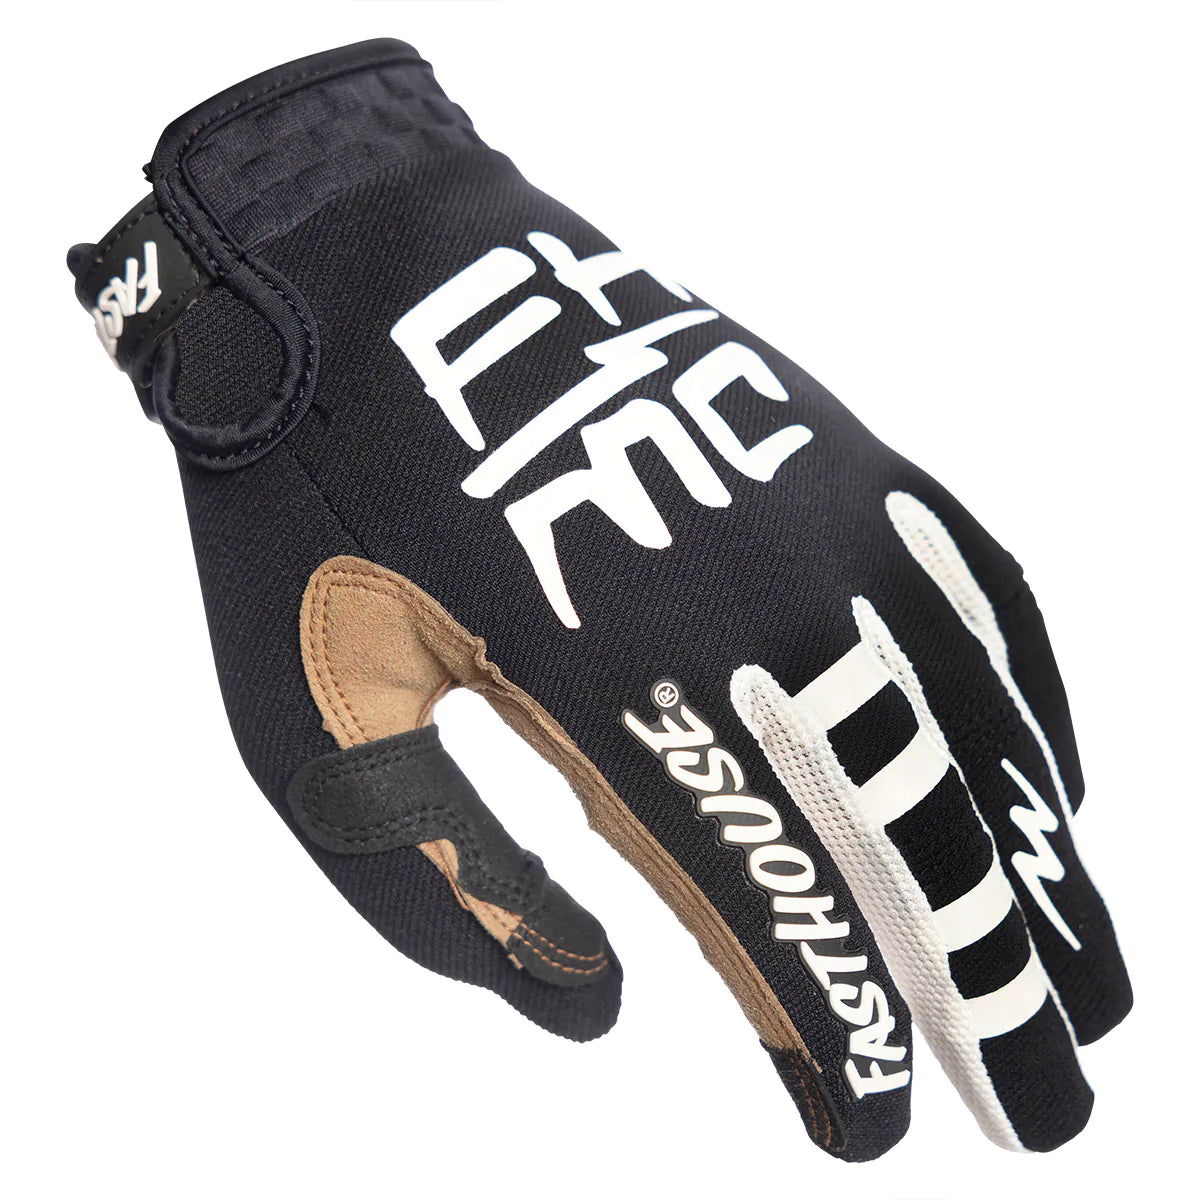 Speed Style Hot Wheels Glove - White/Black